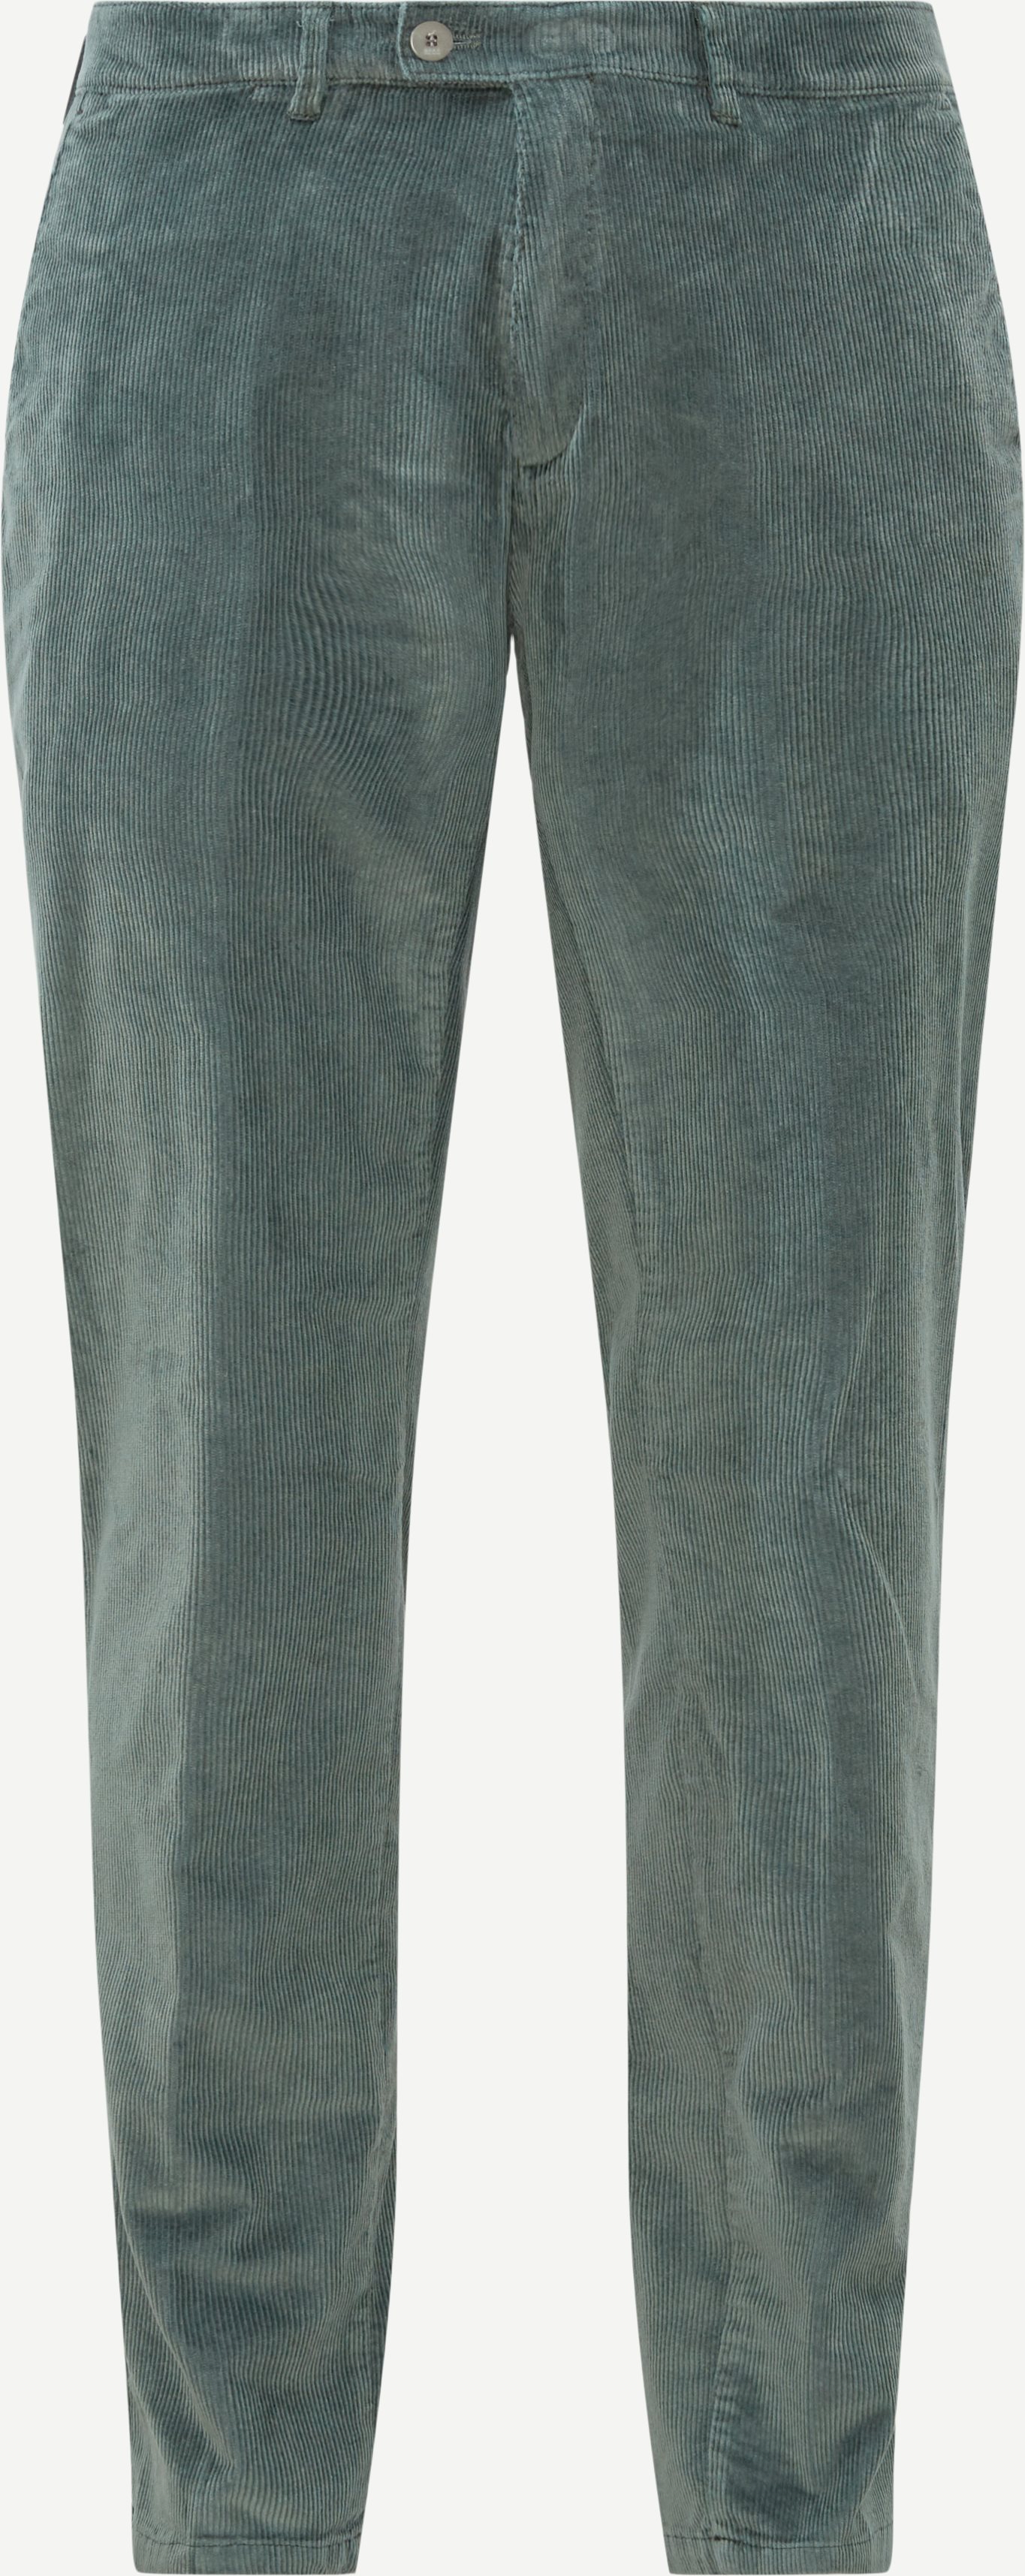 Brax Trousers 89-3234 FELIX Green